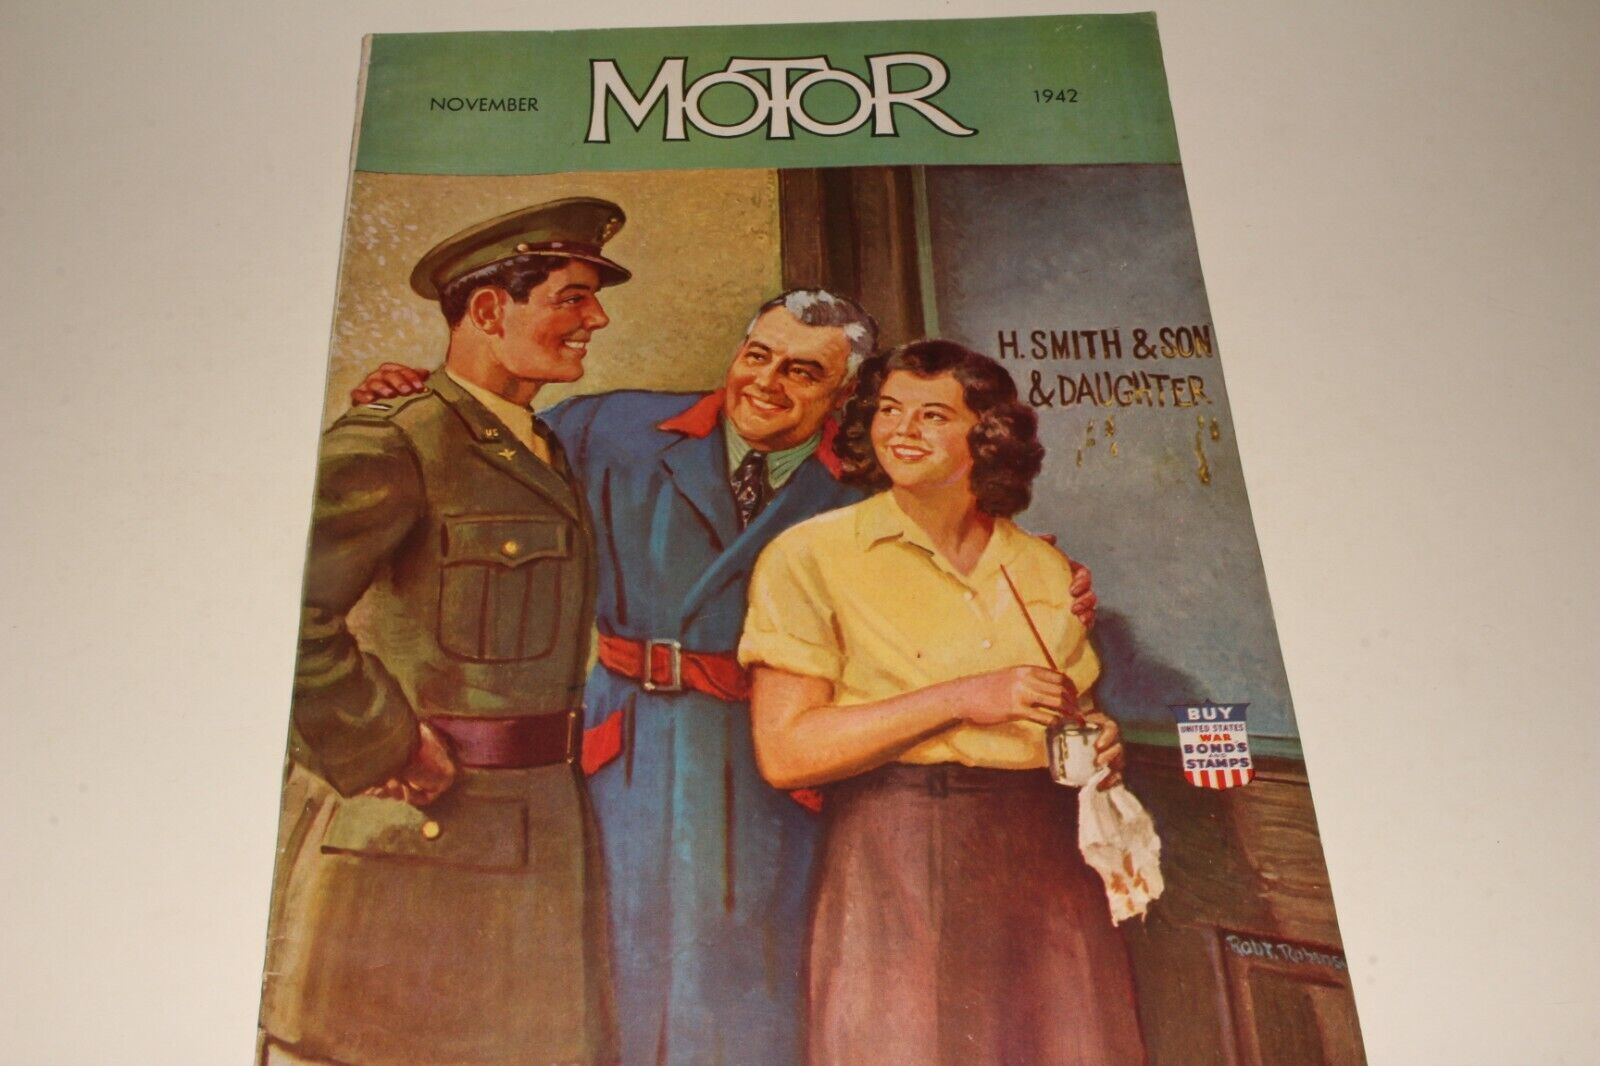 MOTOR MAGAZINE NOVEMBER 1942 ROBERT ROBINSON COVER ART